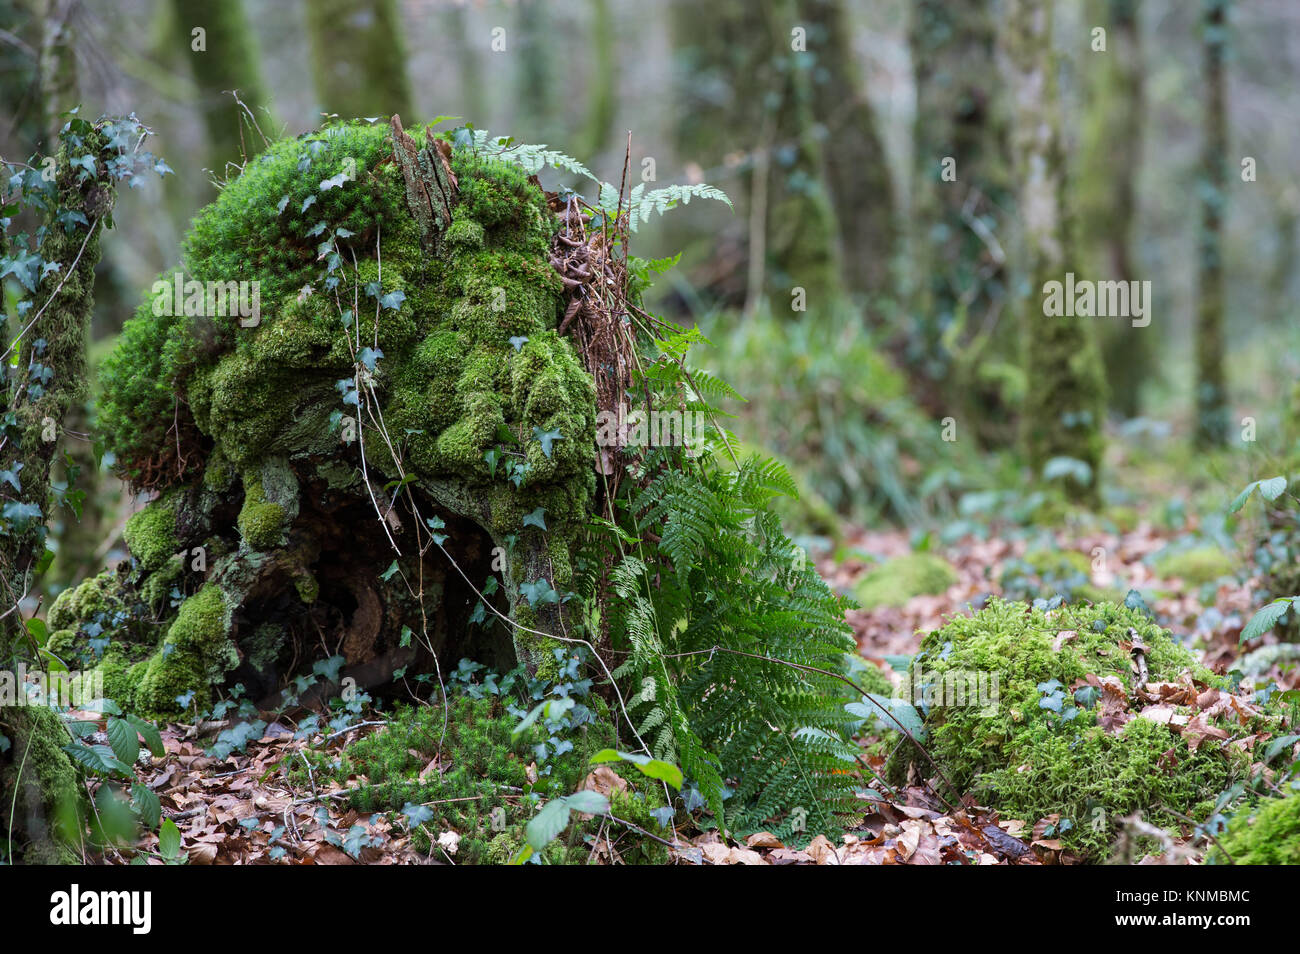 Moss and fern growing on tree stump Stock Photo